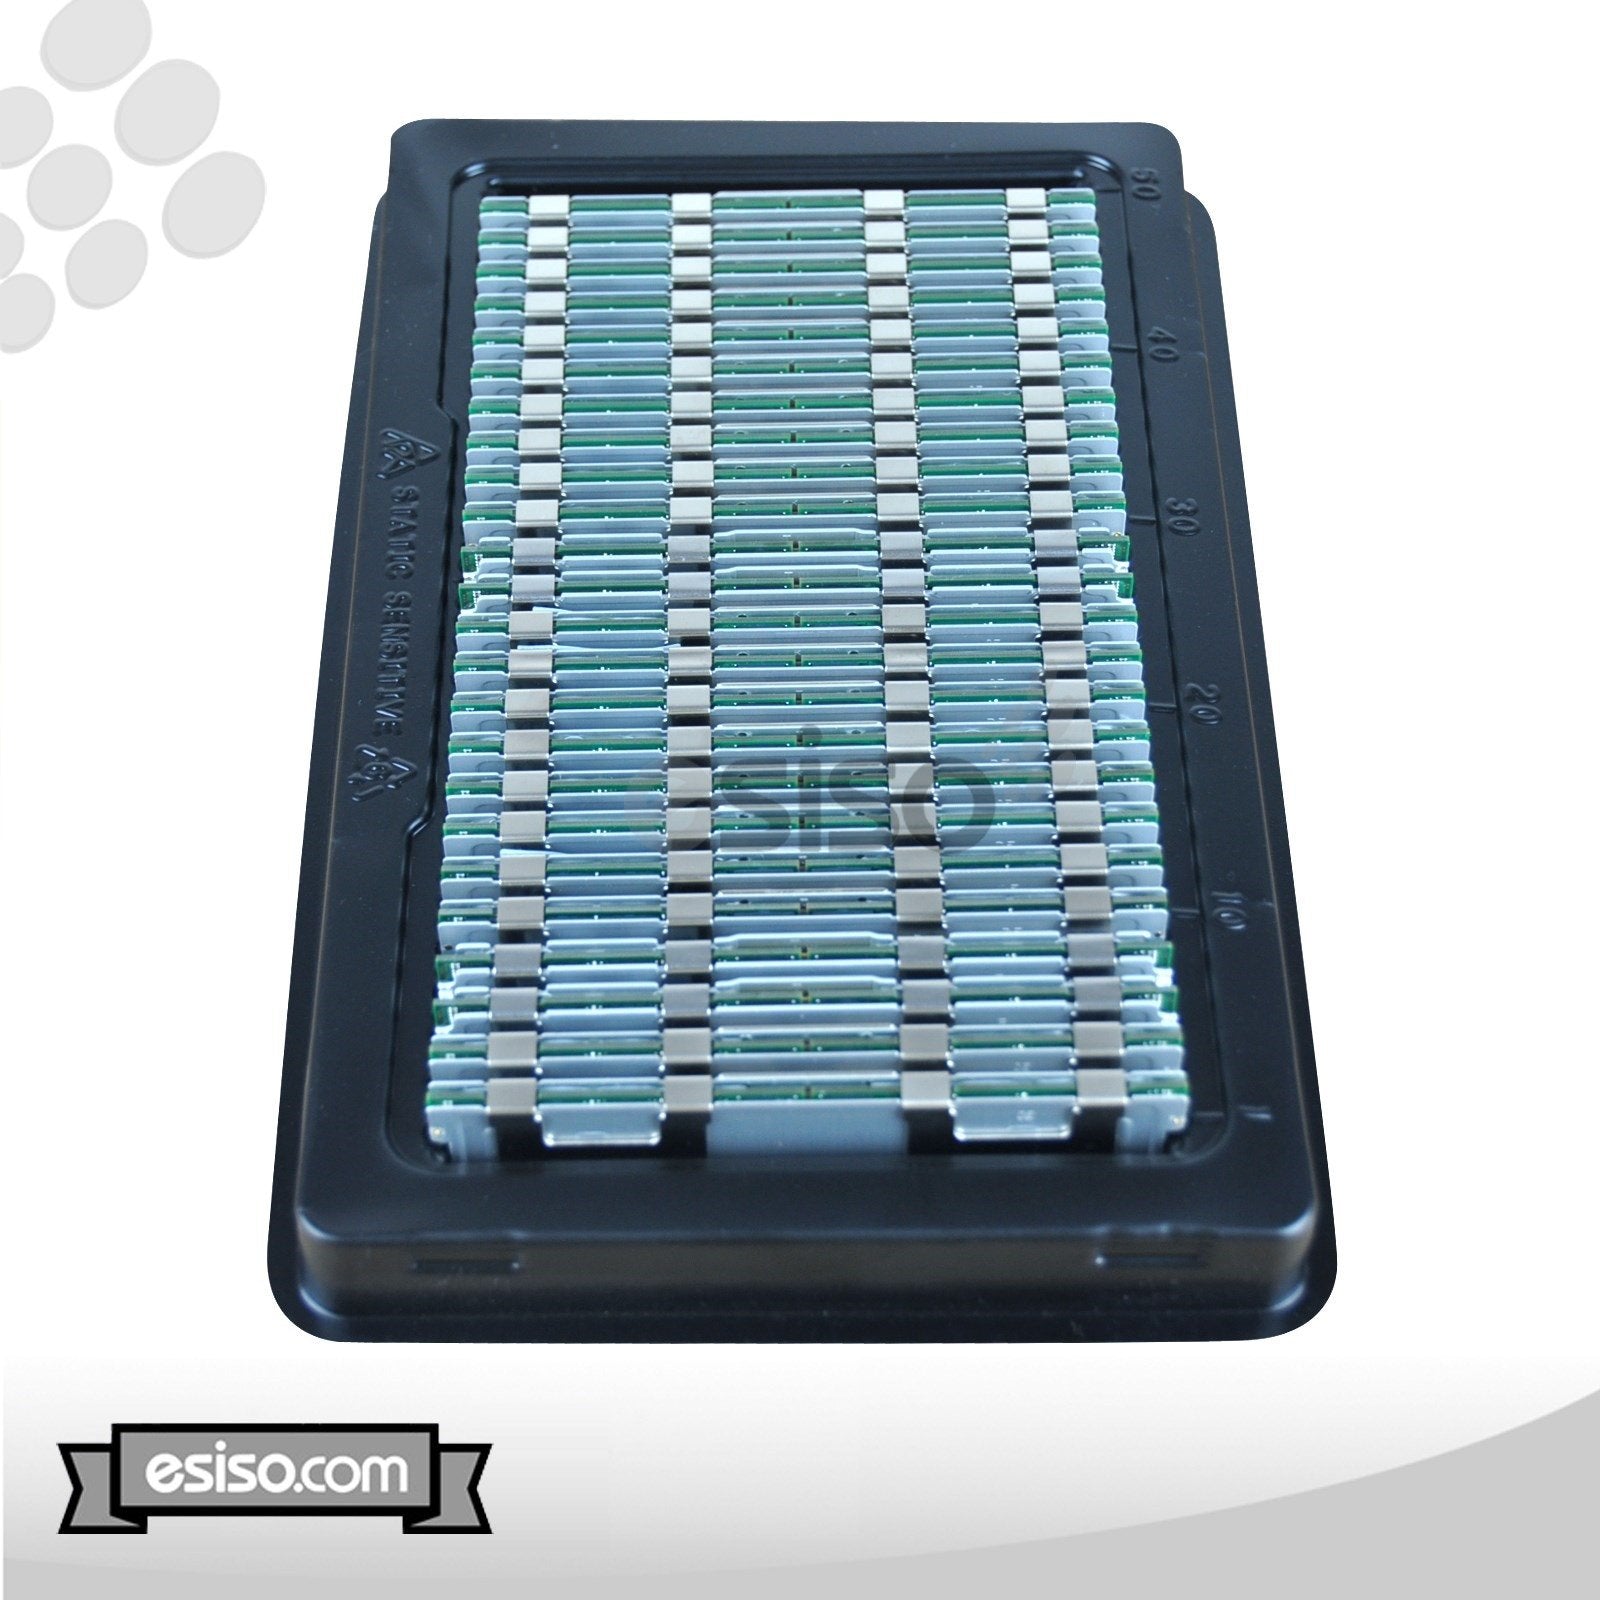 96GB (12x 8GB) 10600R RAM UPGRADE MEMORY FOR DELL POWEREDGE R410 R510 T410 T610